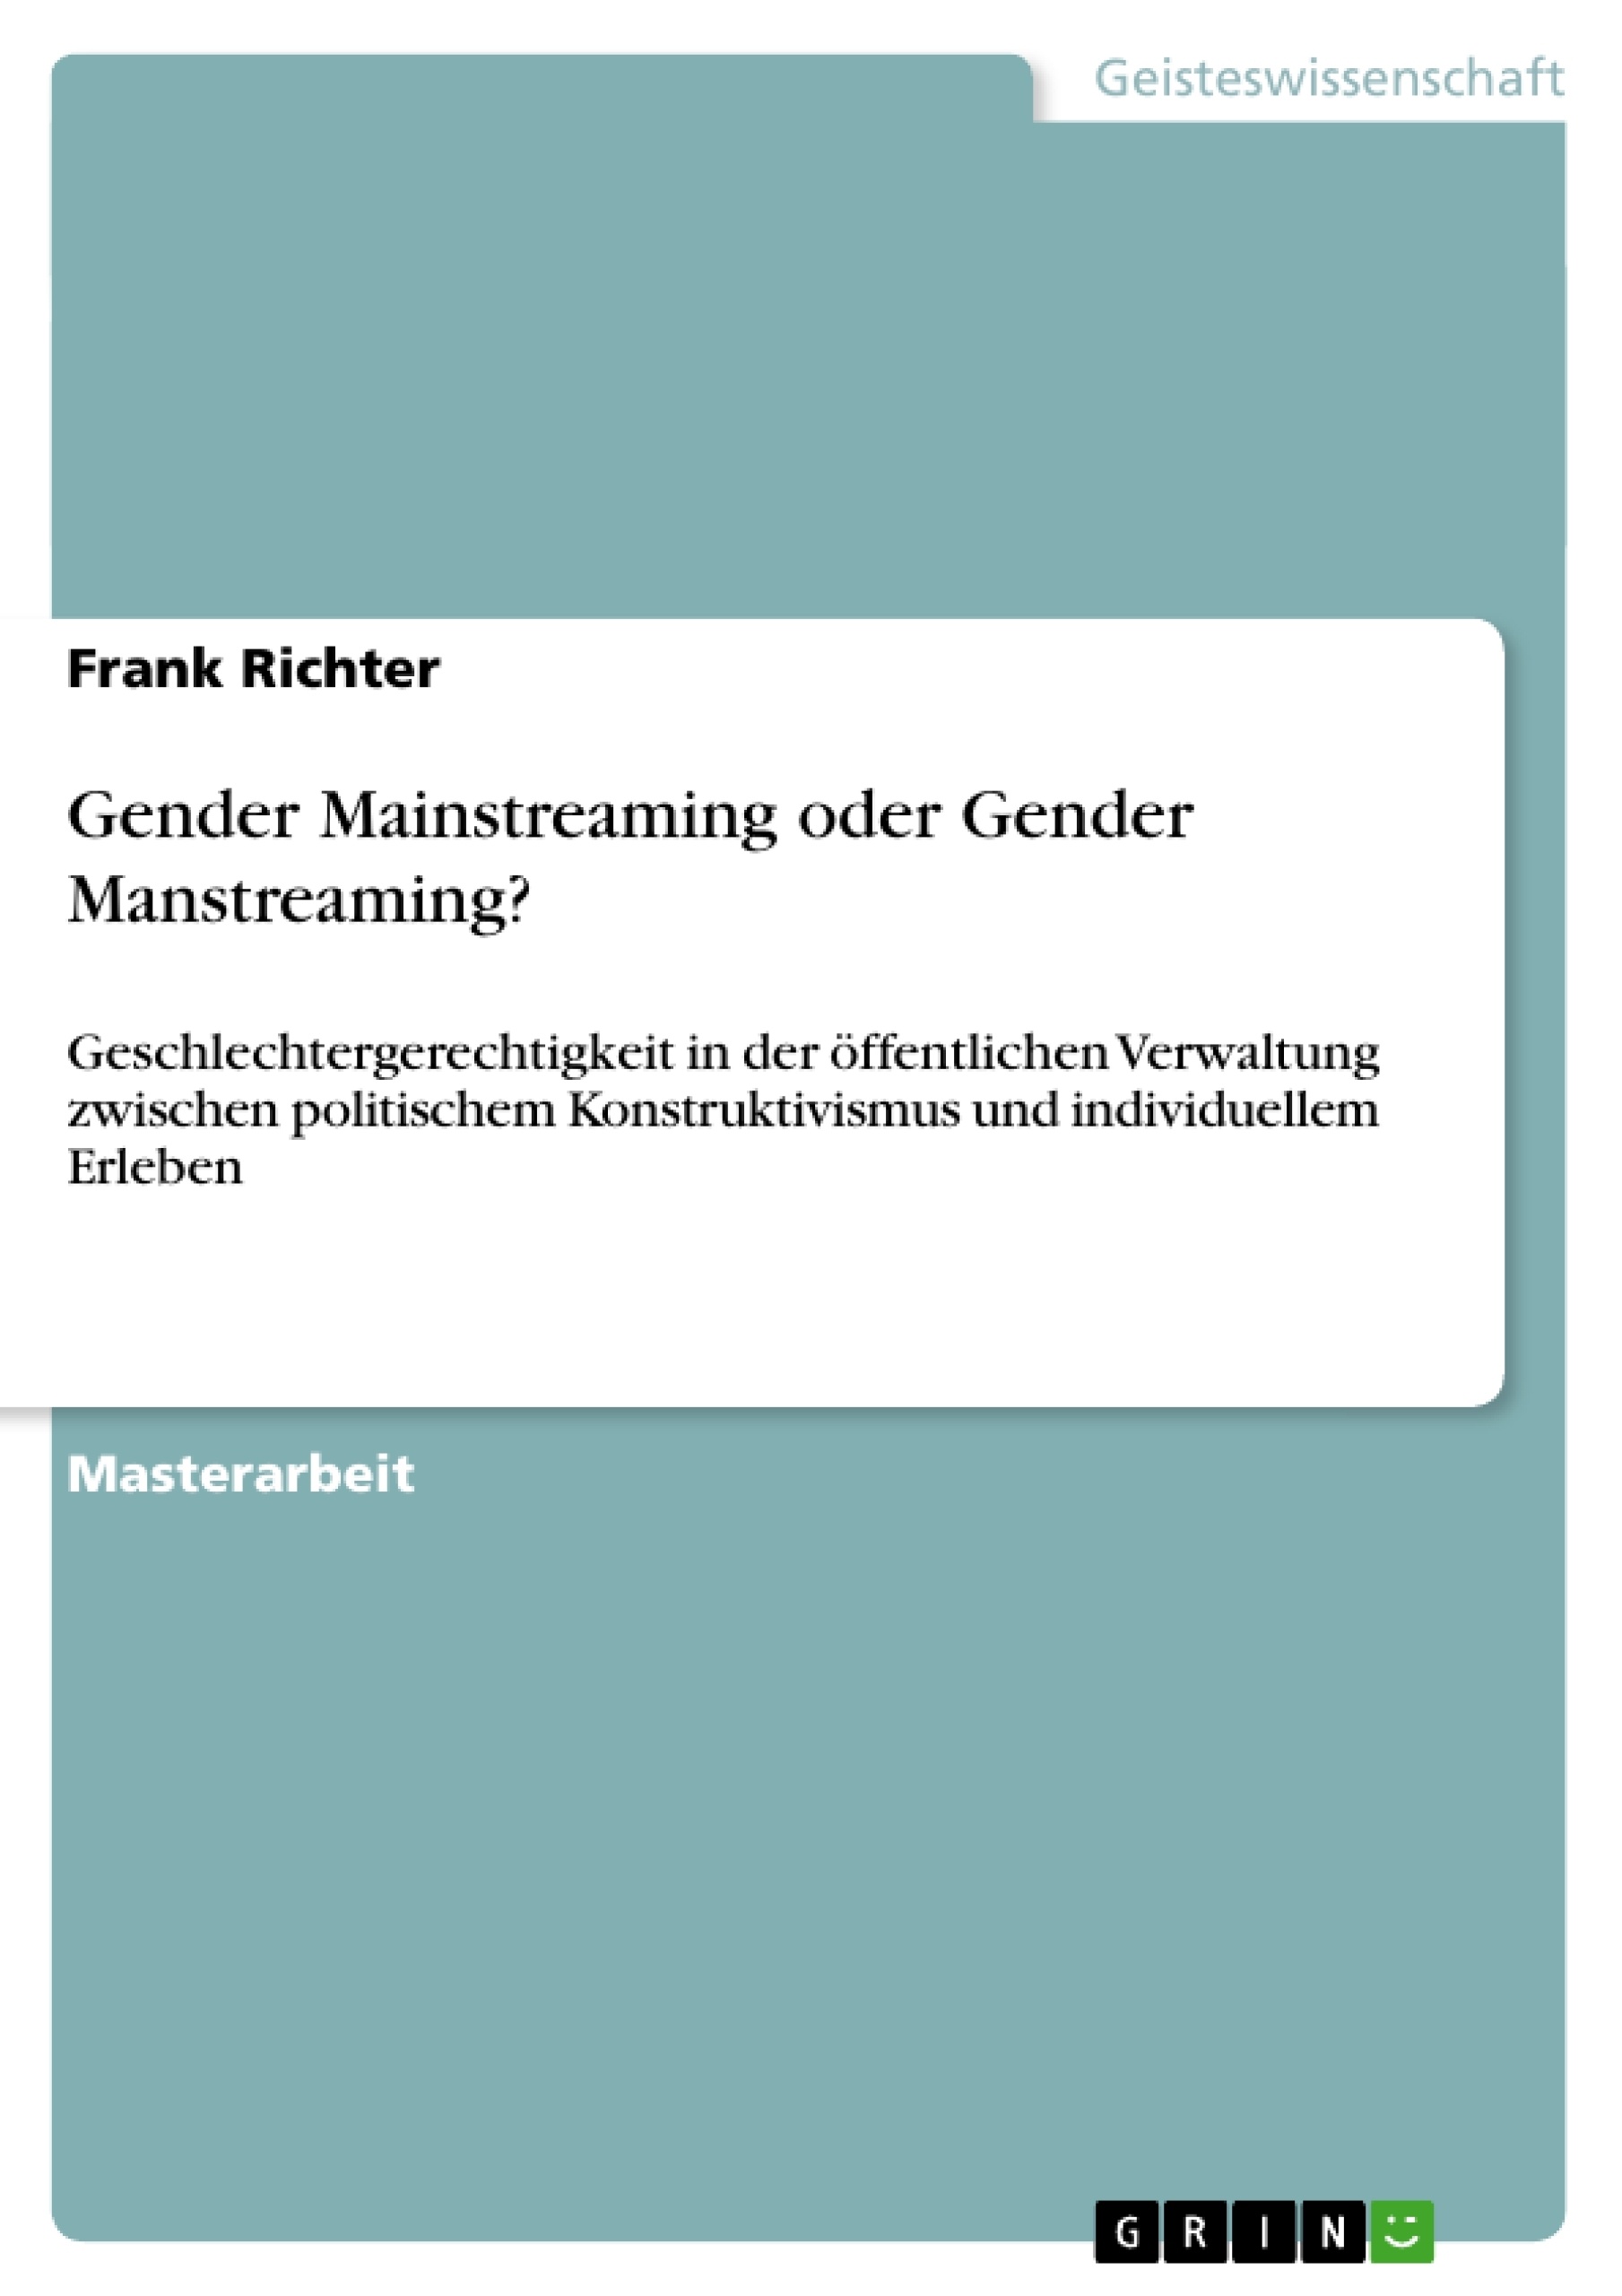 Titel: Gender Mainstreaming oder Gender Manstreaming?